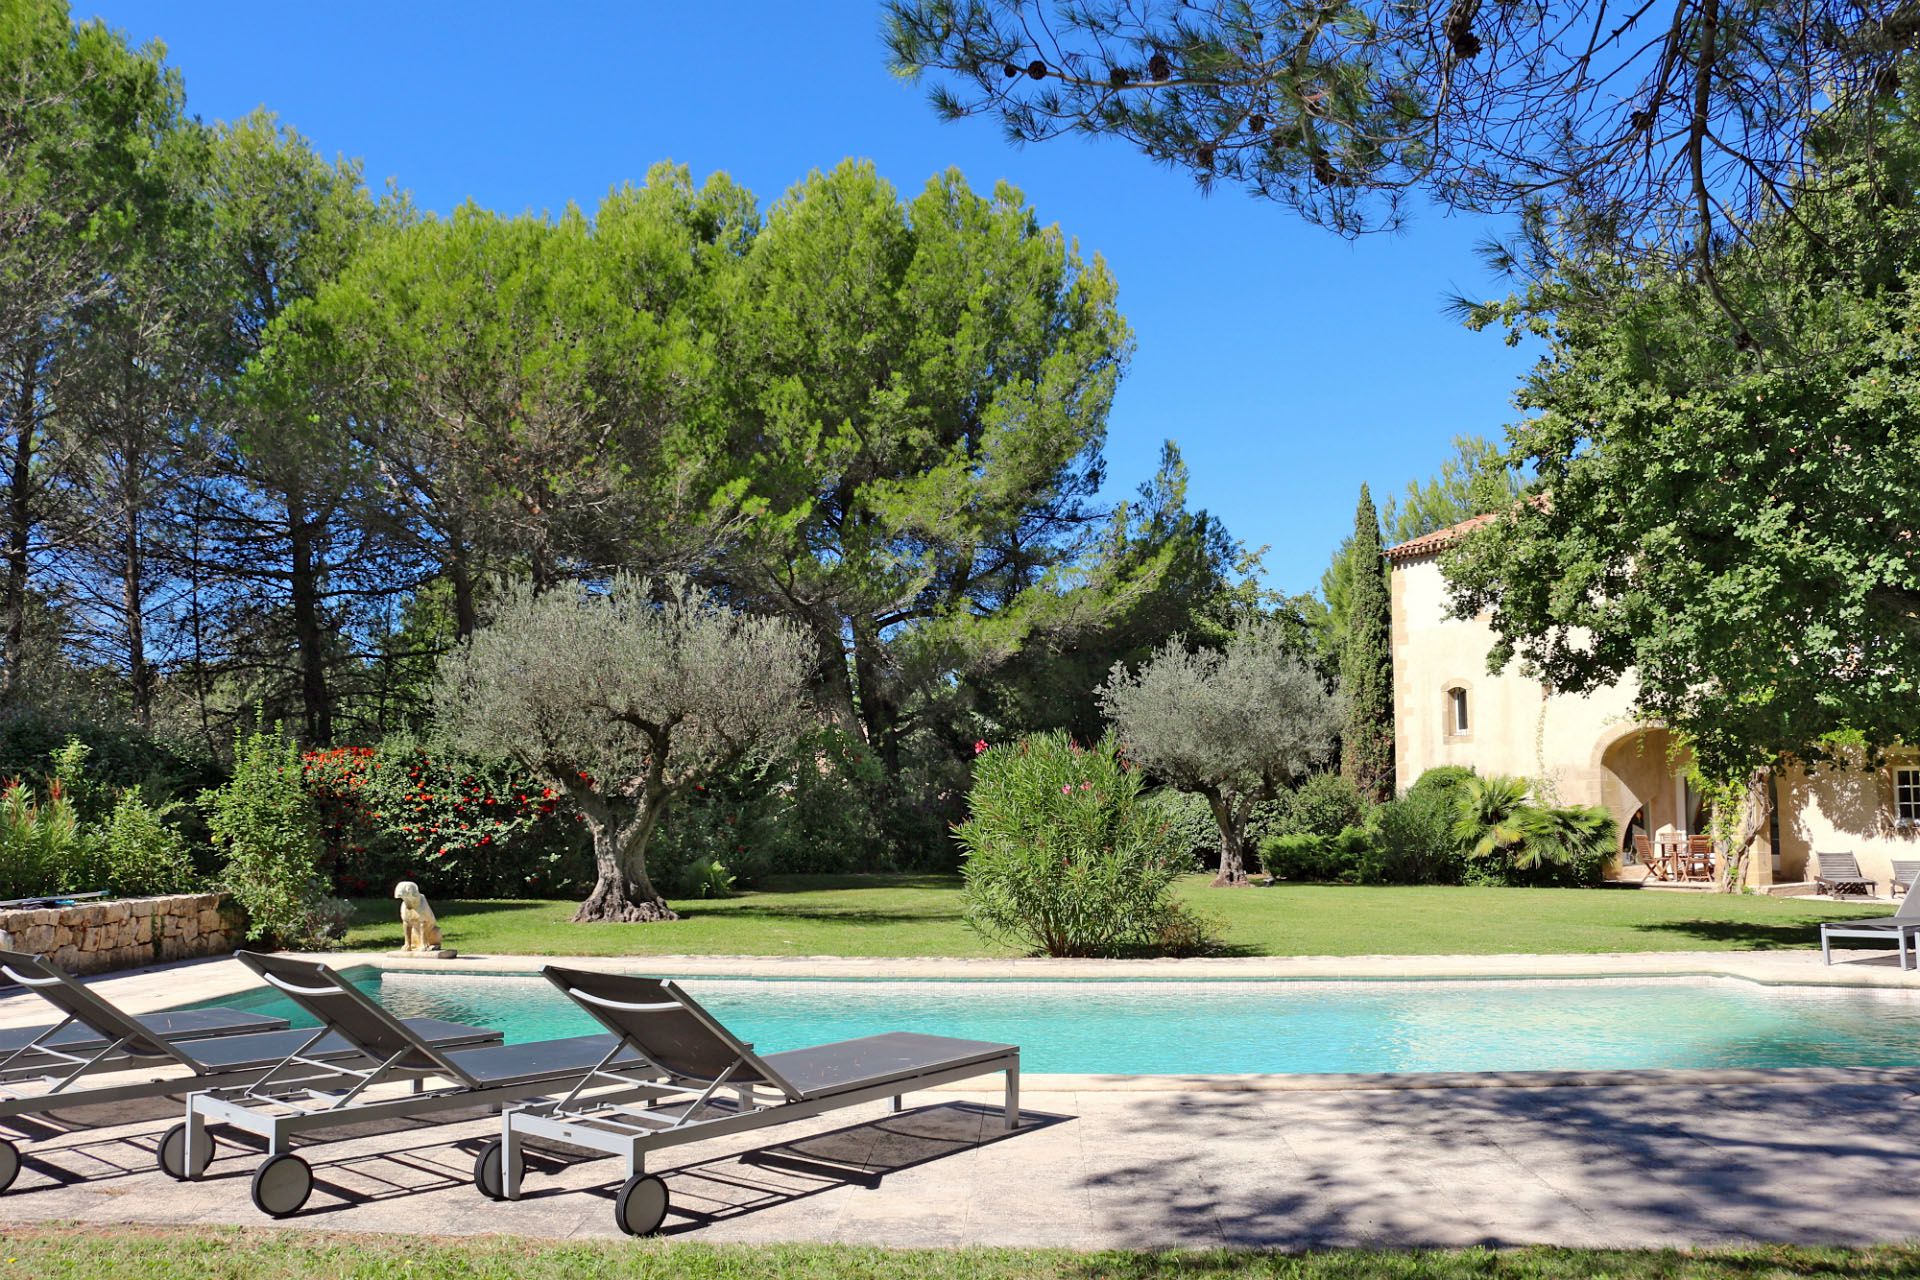 Méditerranée Location Bastide with Private pool in Saint-Cannat, Provence